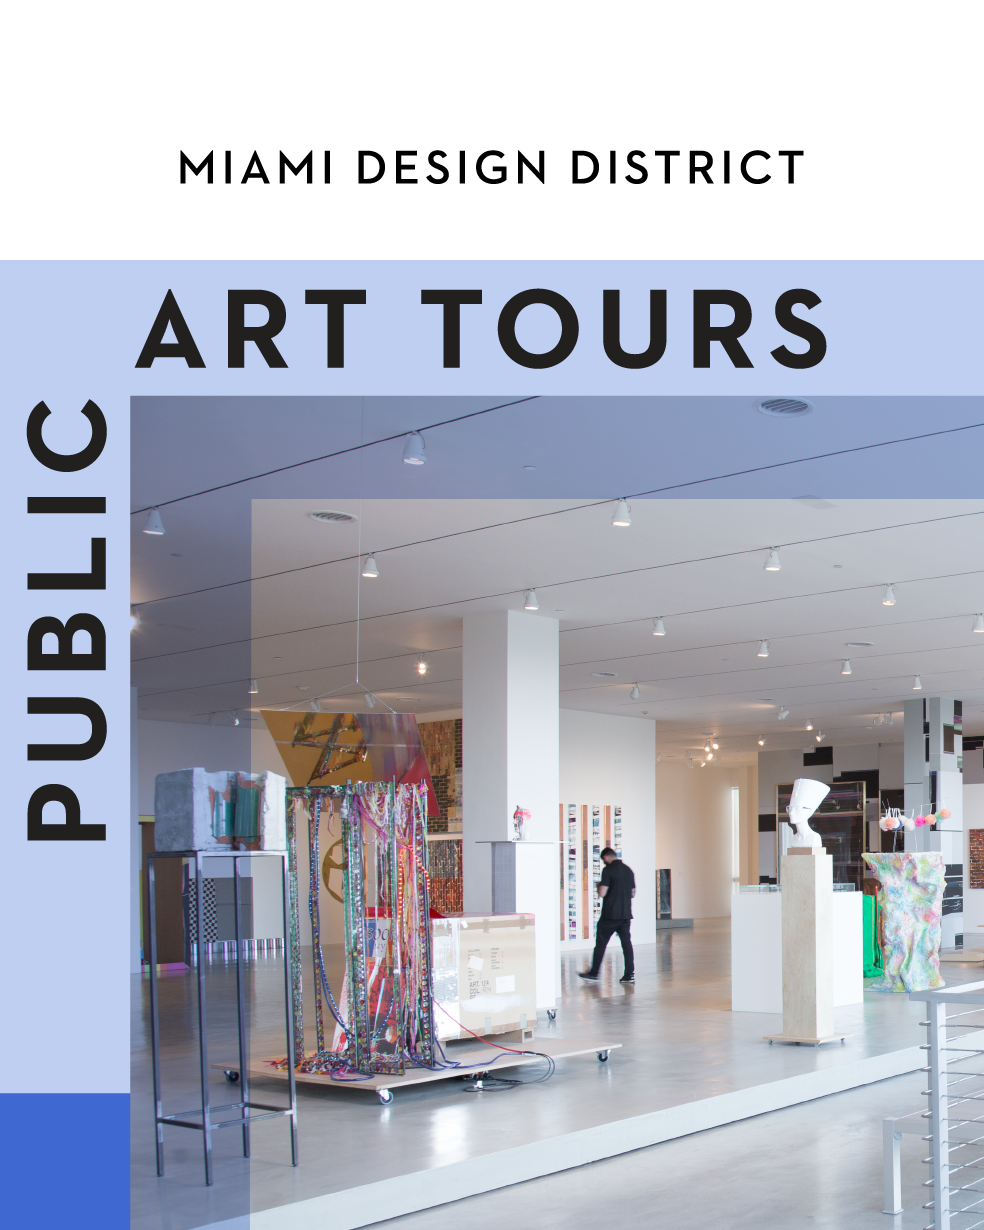 Art Tours in Miami Design District